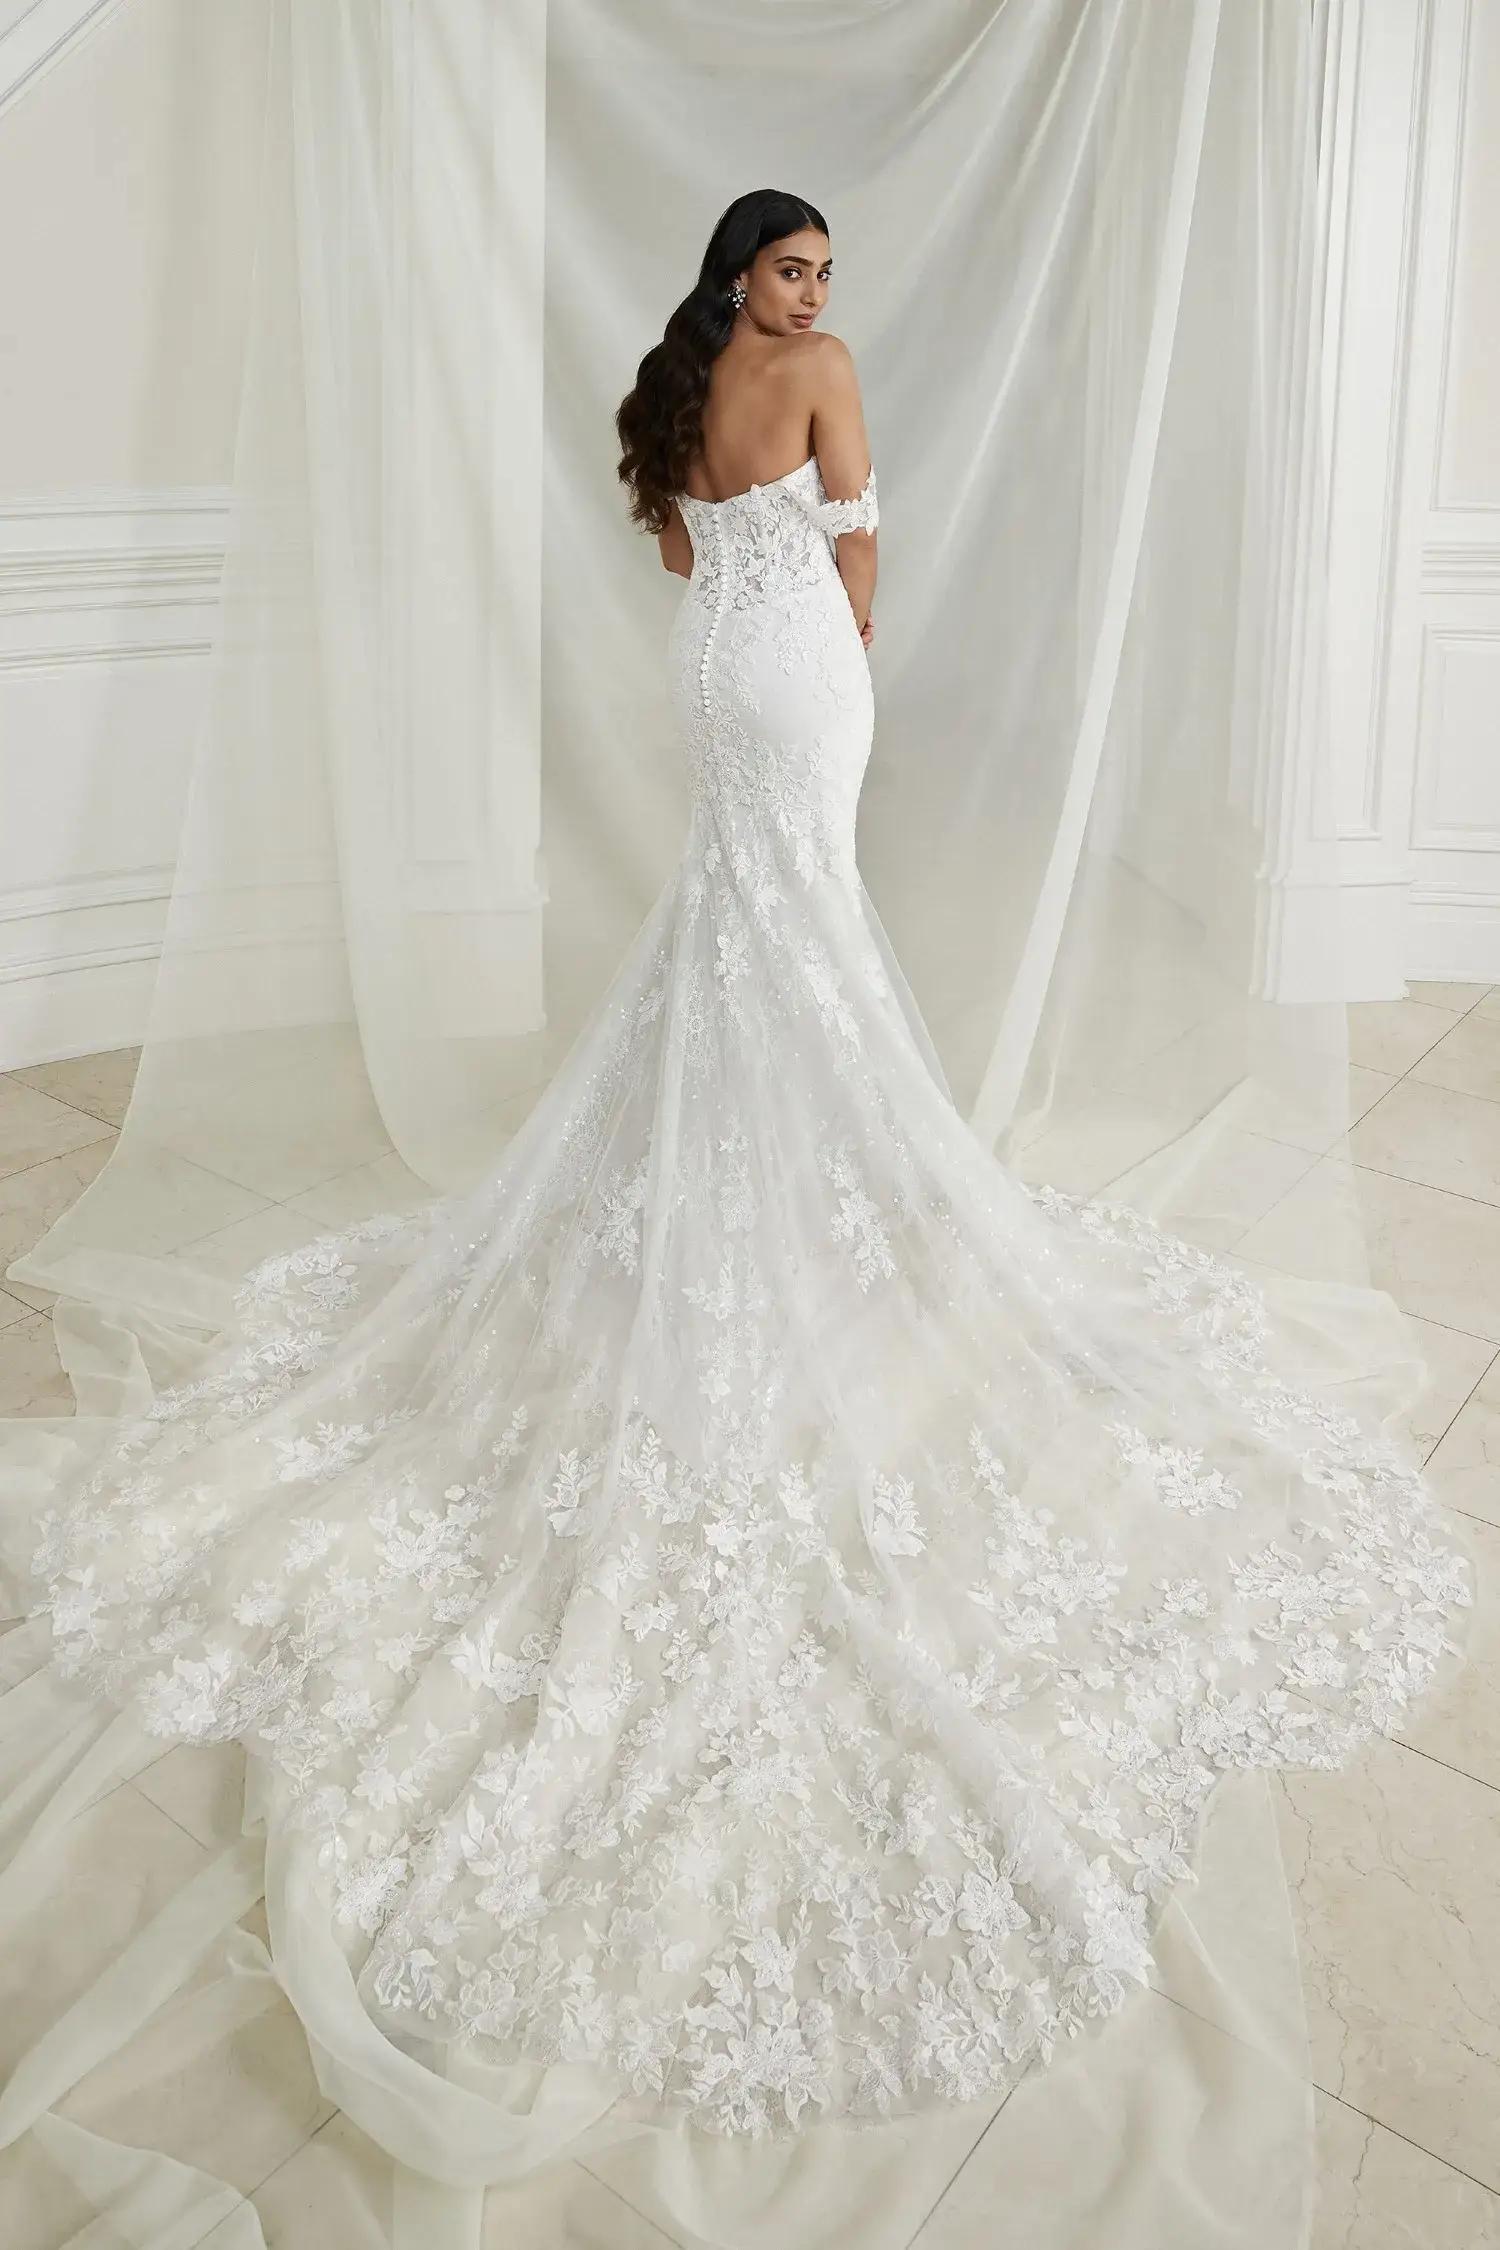 Choosing the Perfect Winter Wedding Dress Image